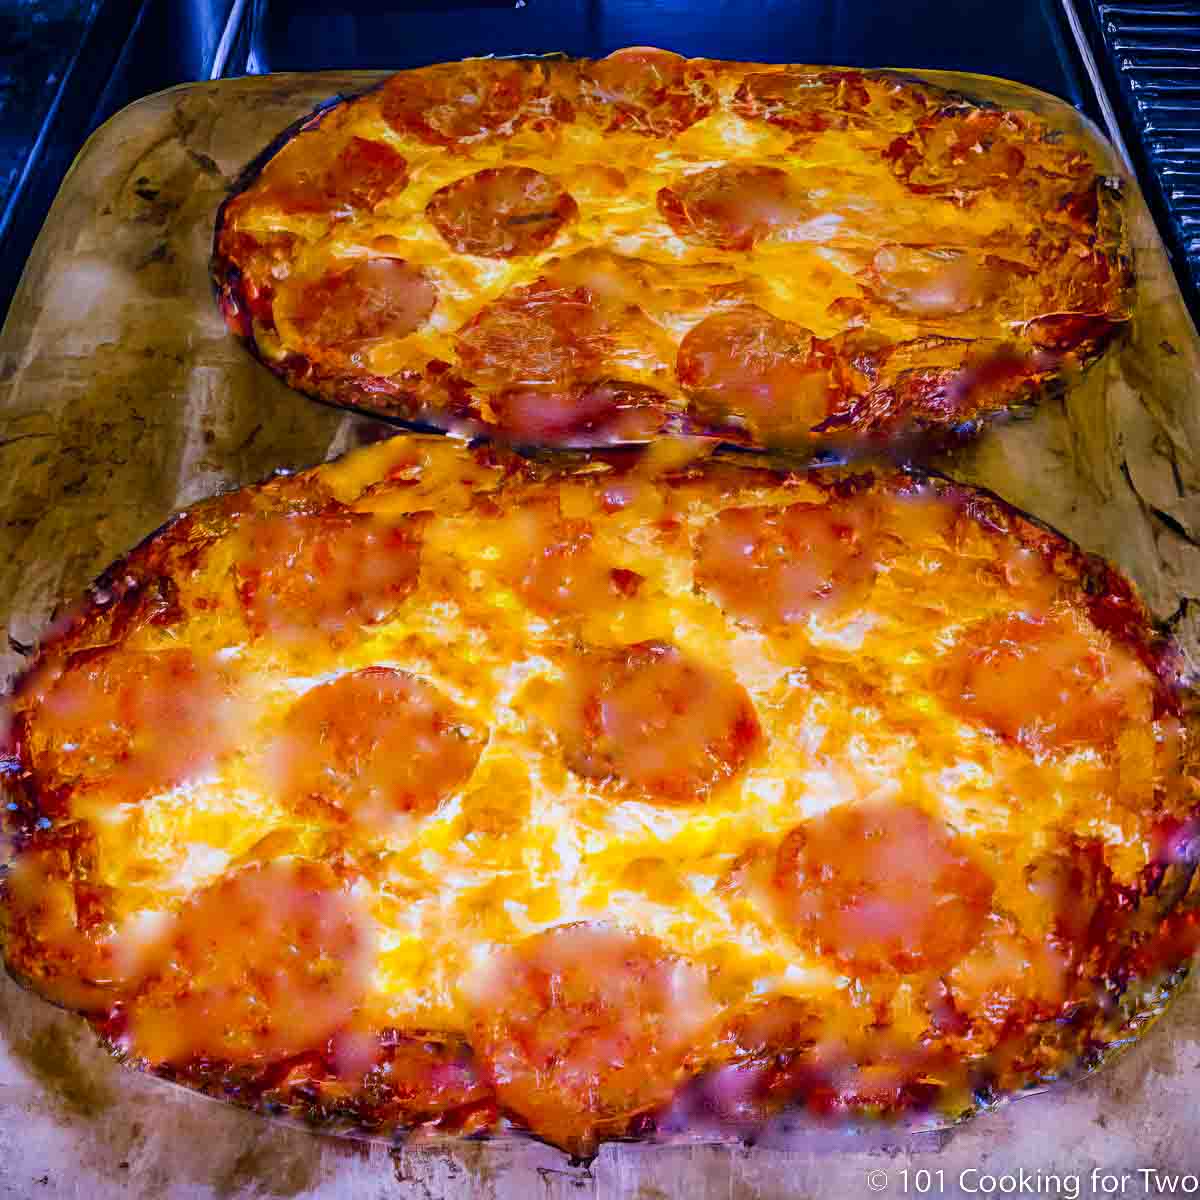 tortilla pizzas on a pizza stone.